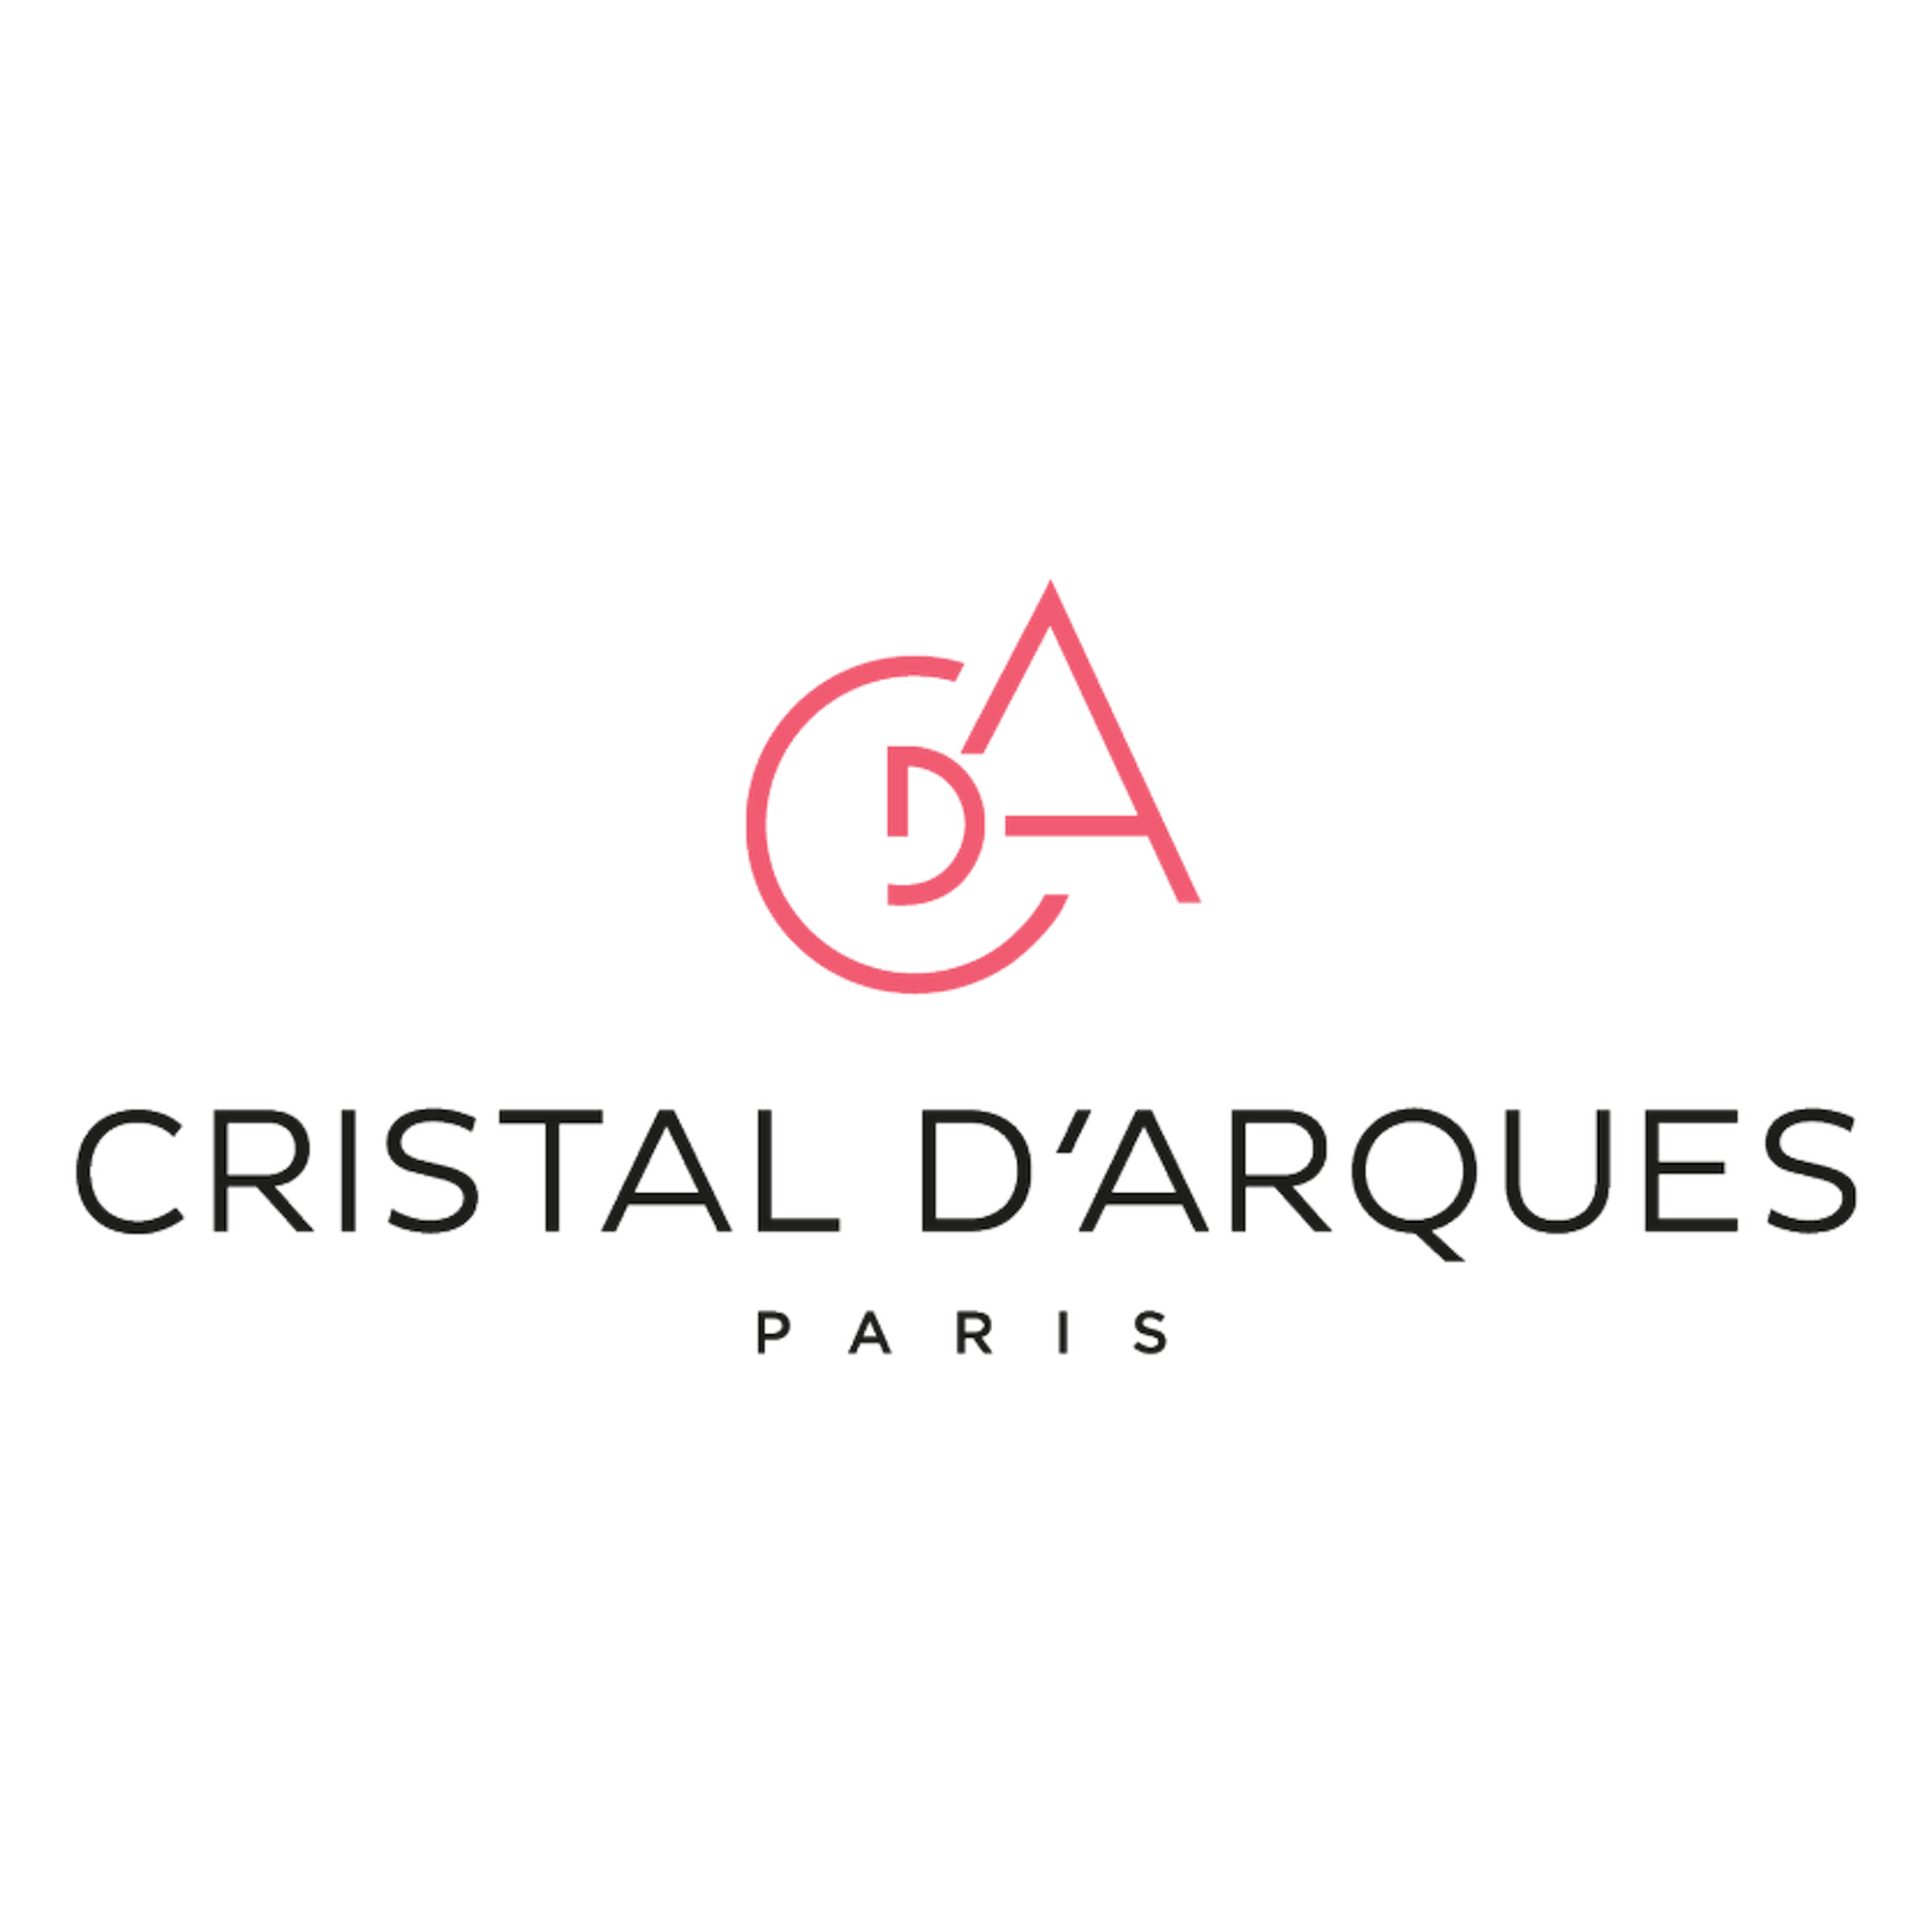 Cristal D'Arques Paris